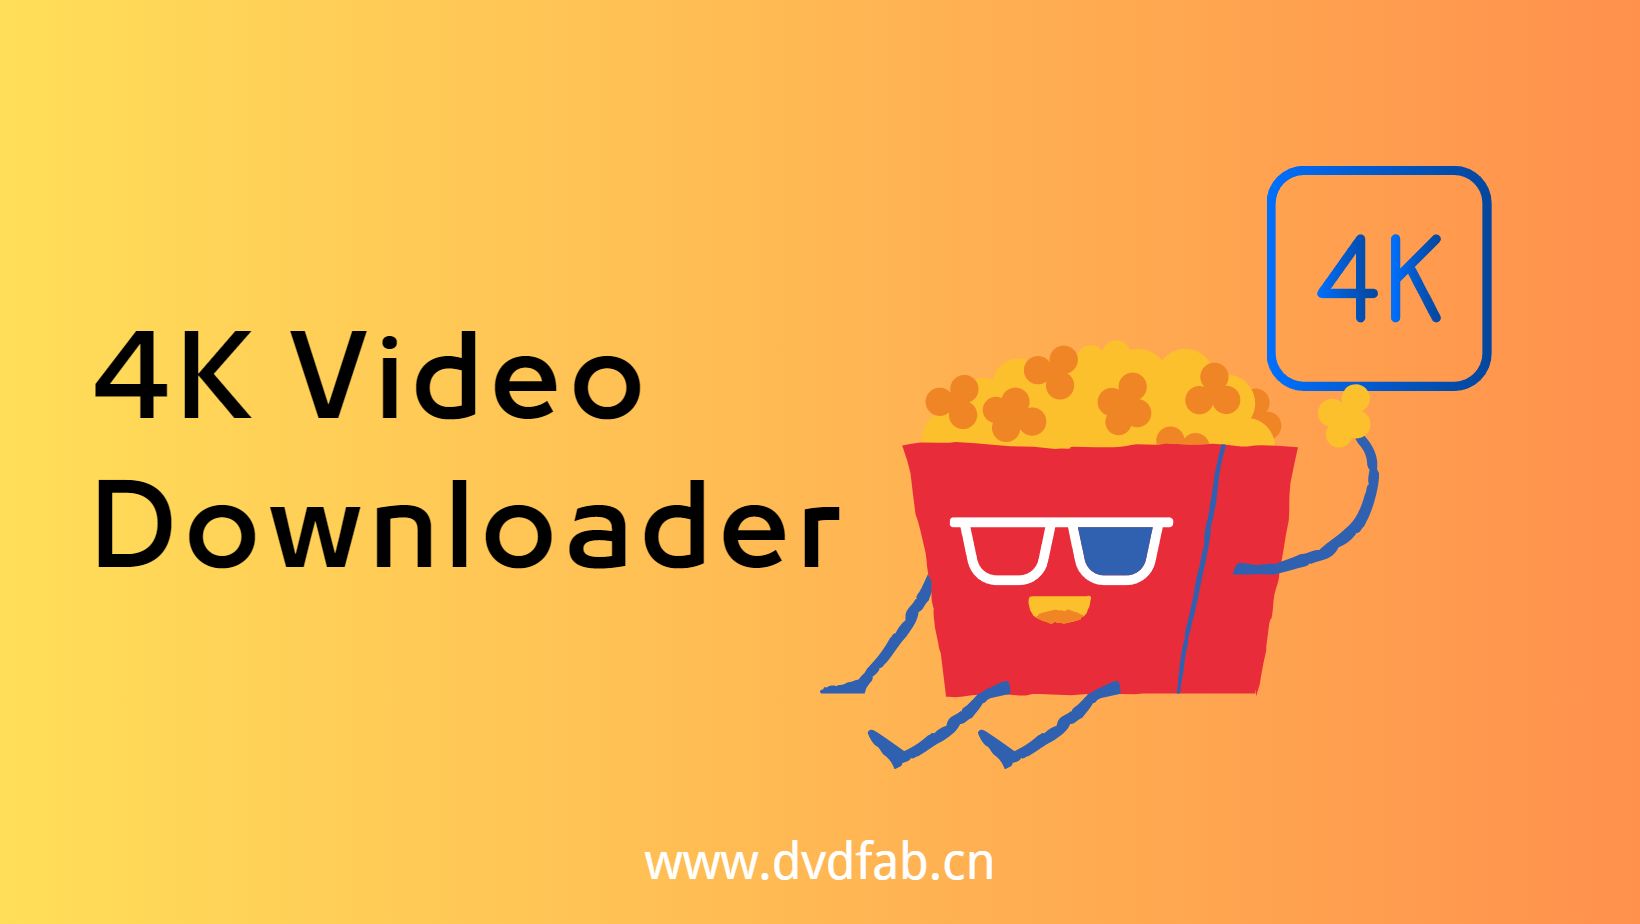 Free 4K Video Downloader - Download 4K Video from